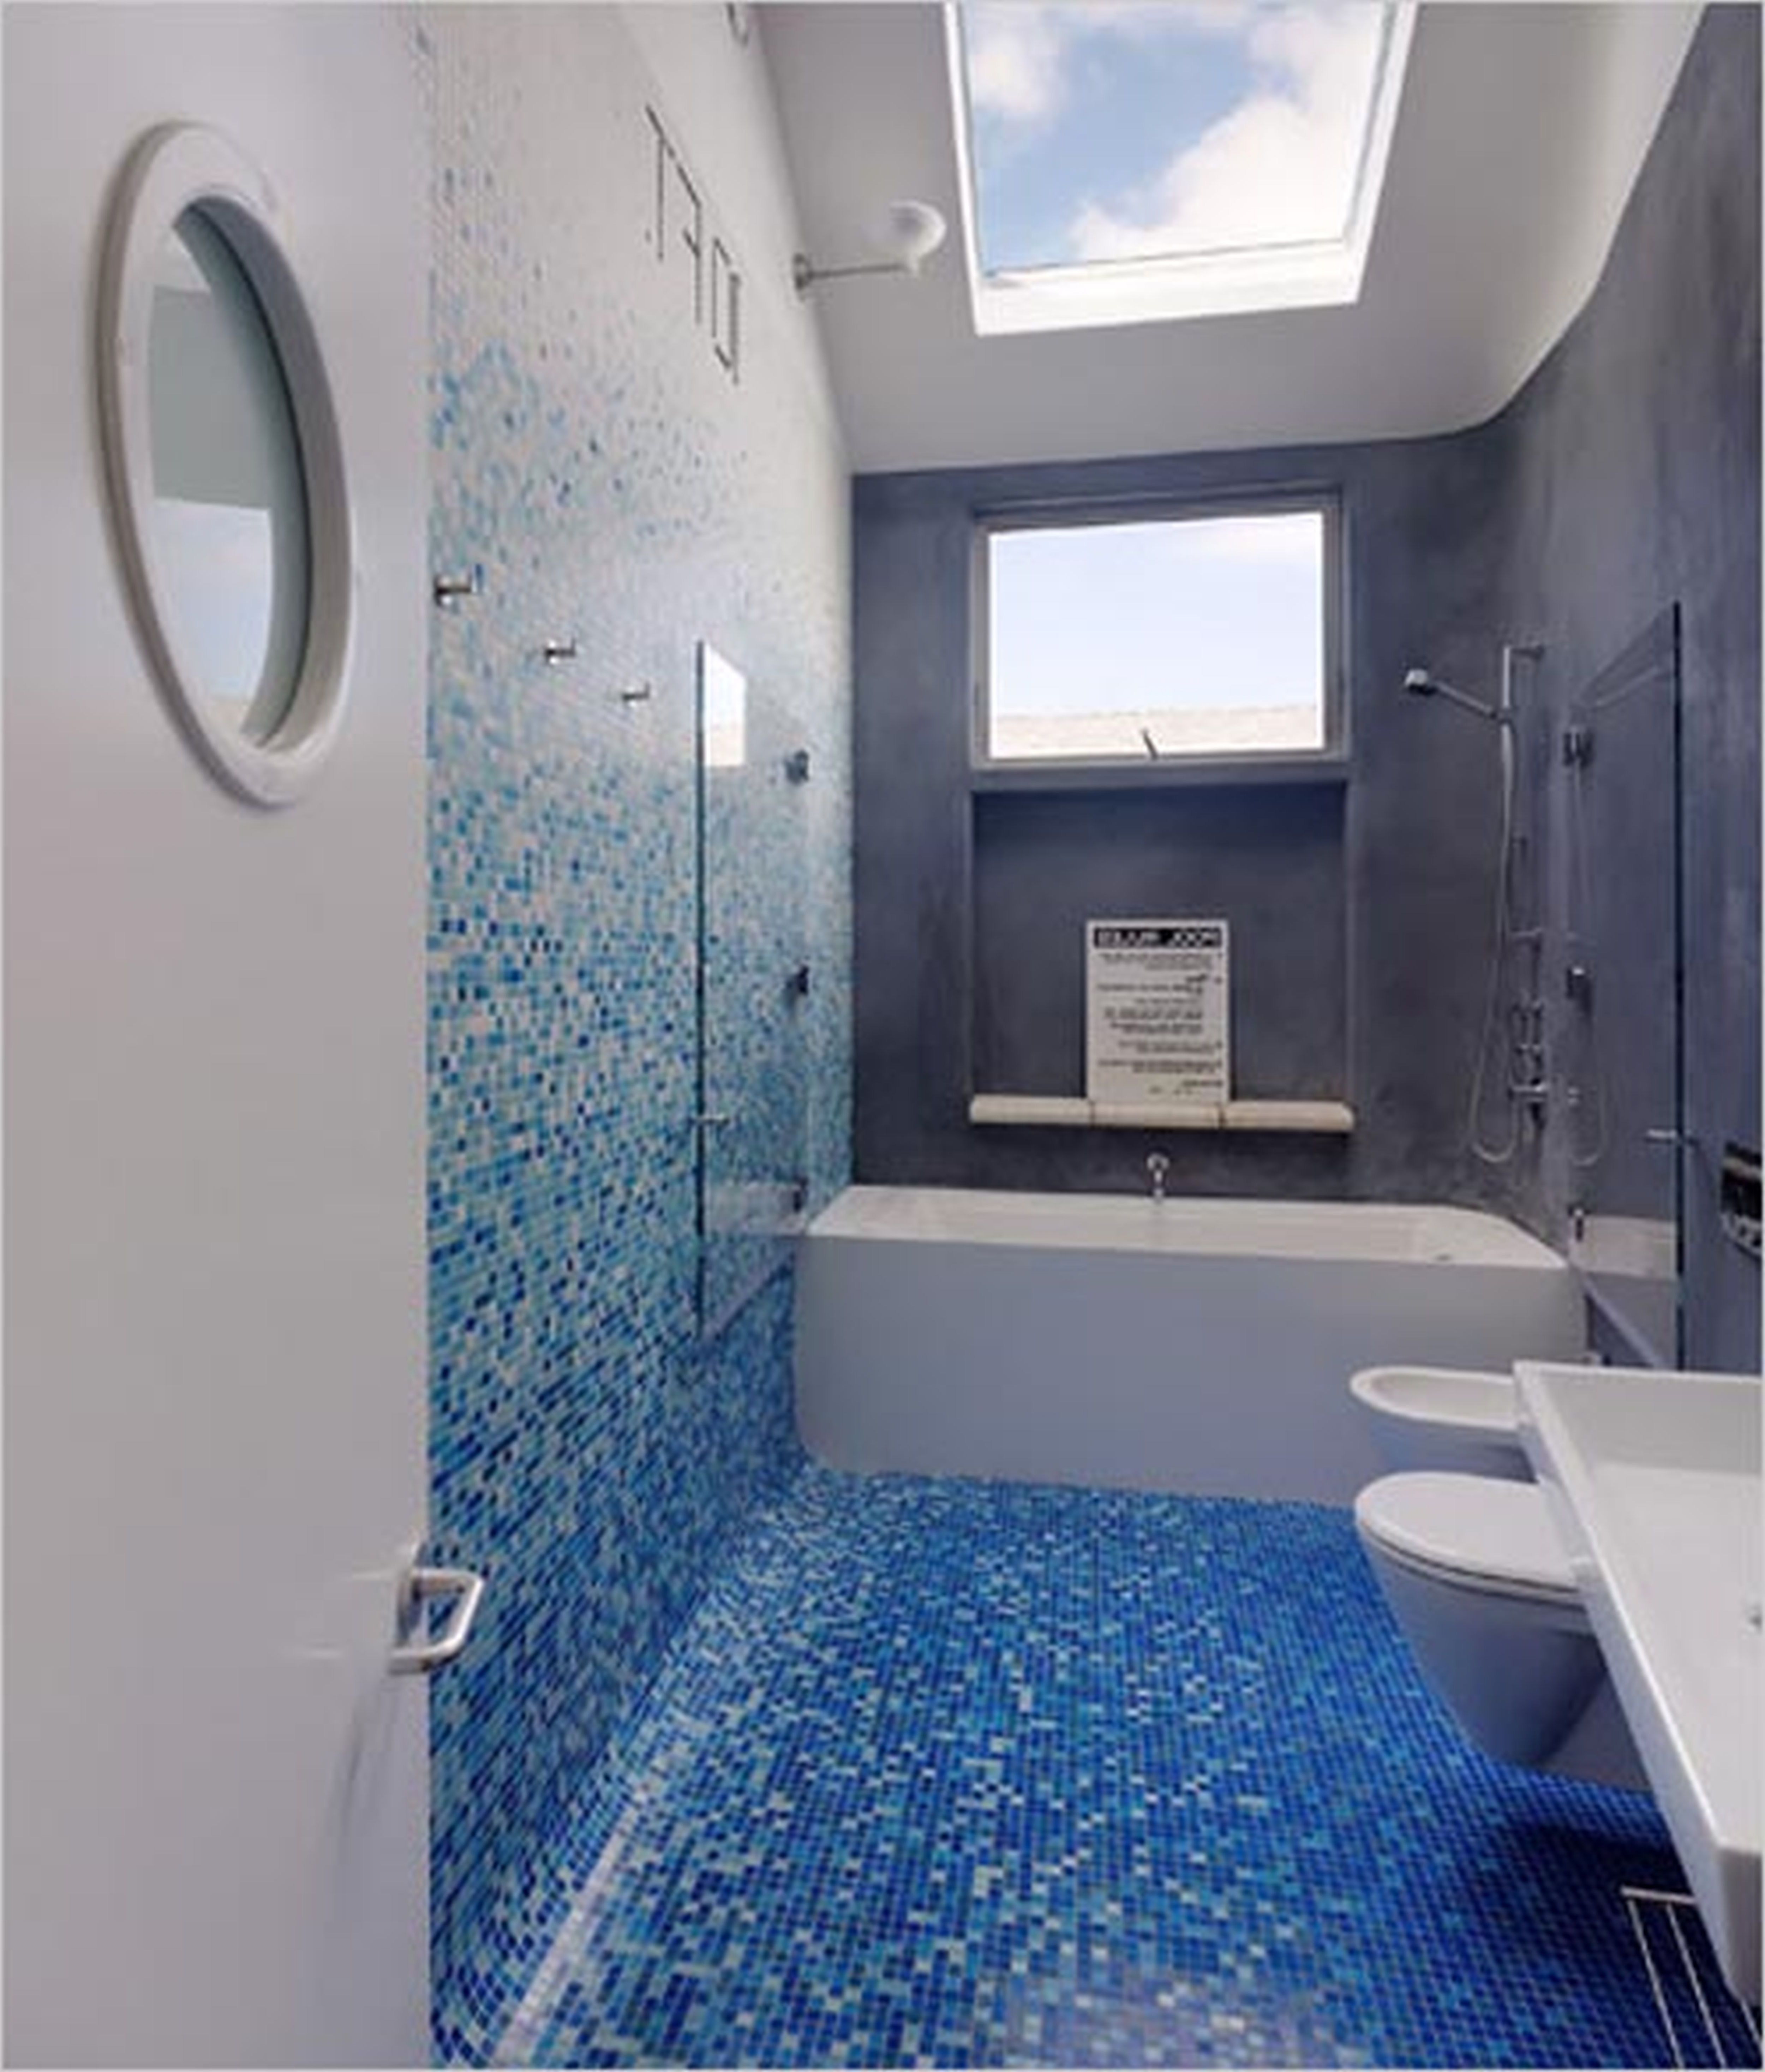 painting-bathroom-tile-with-bathroom-energetic-bathroom-paint-ideas-with-fresh-blue-mosaic